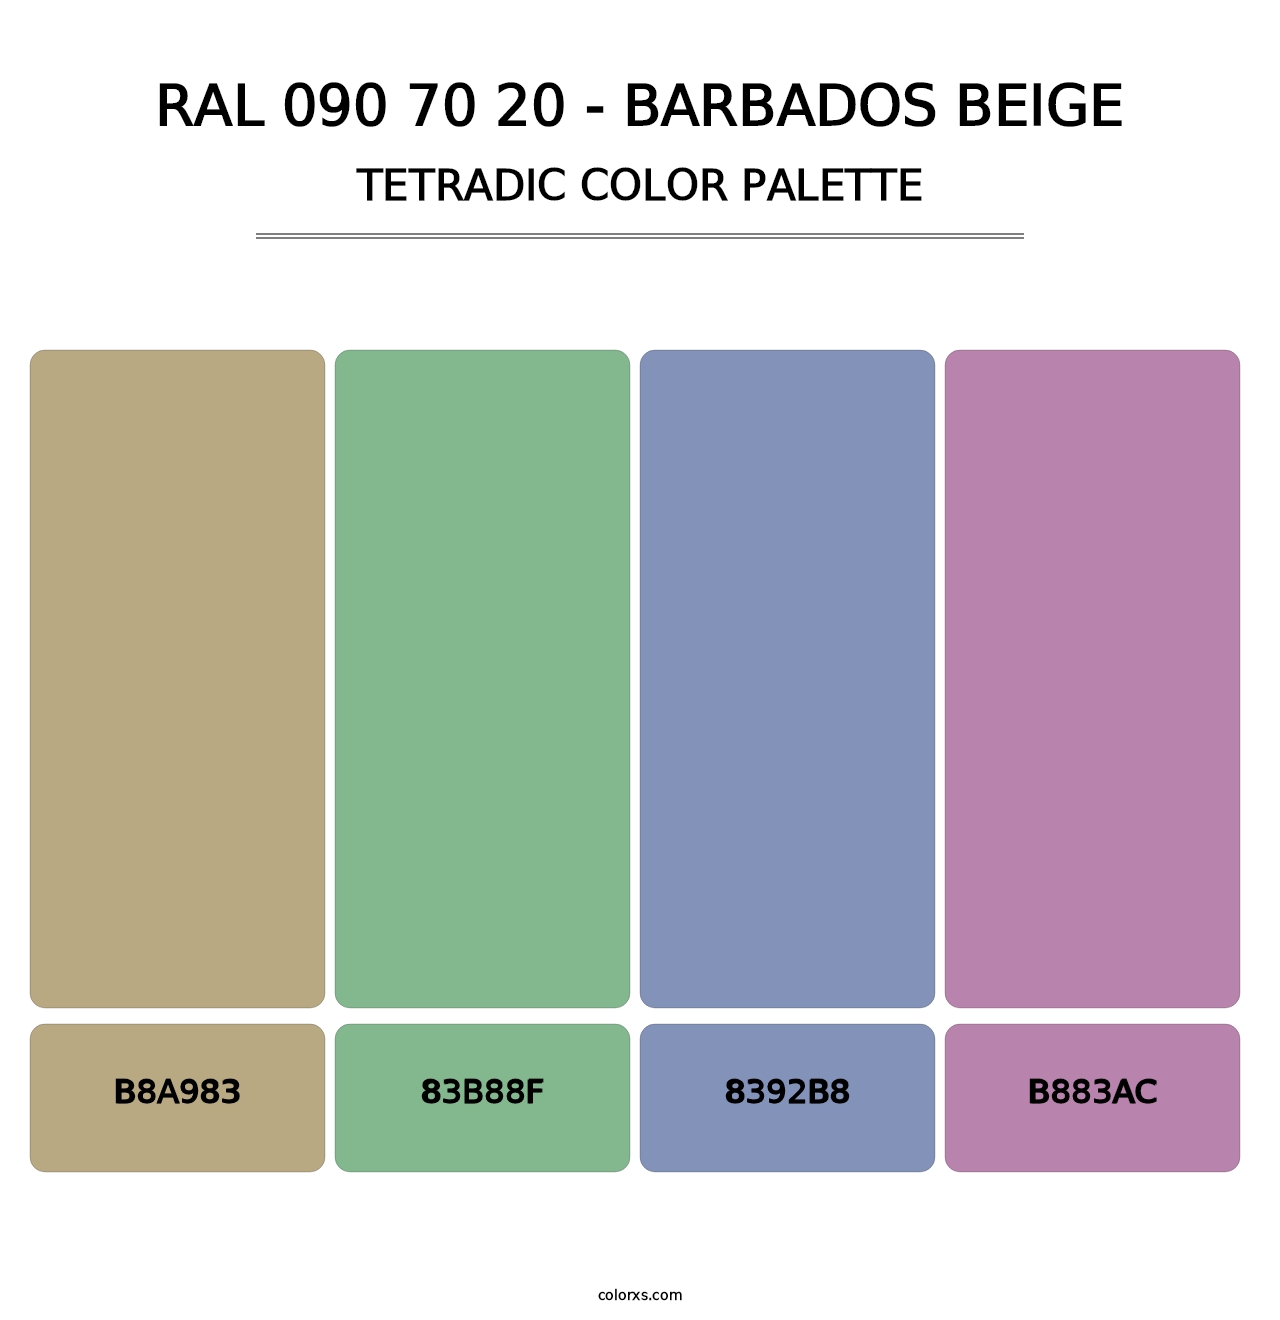 RAL 090 70 20 - Barbados Beige - Tetradic Color Palette